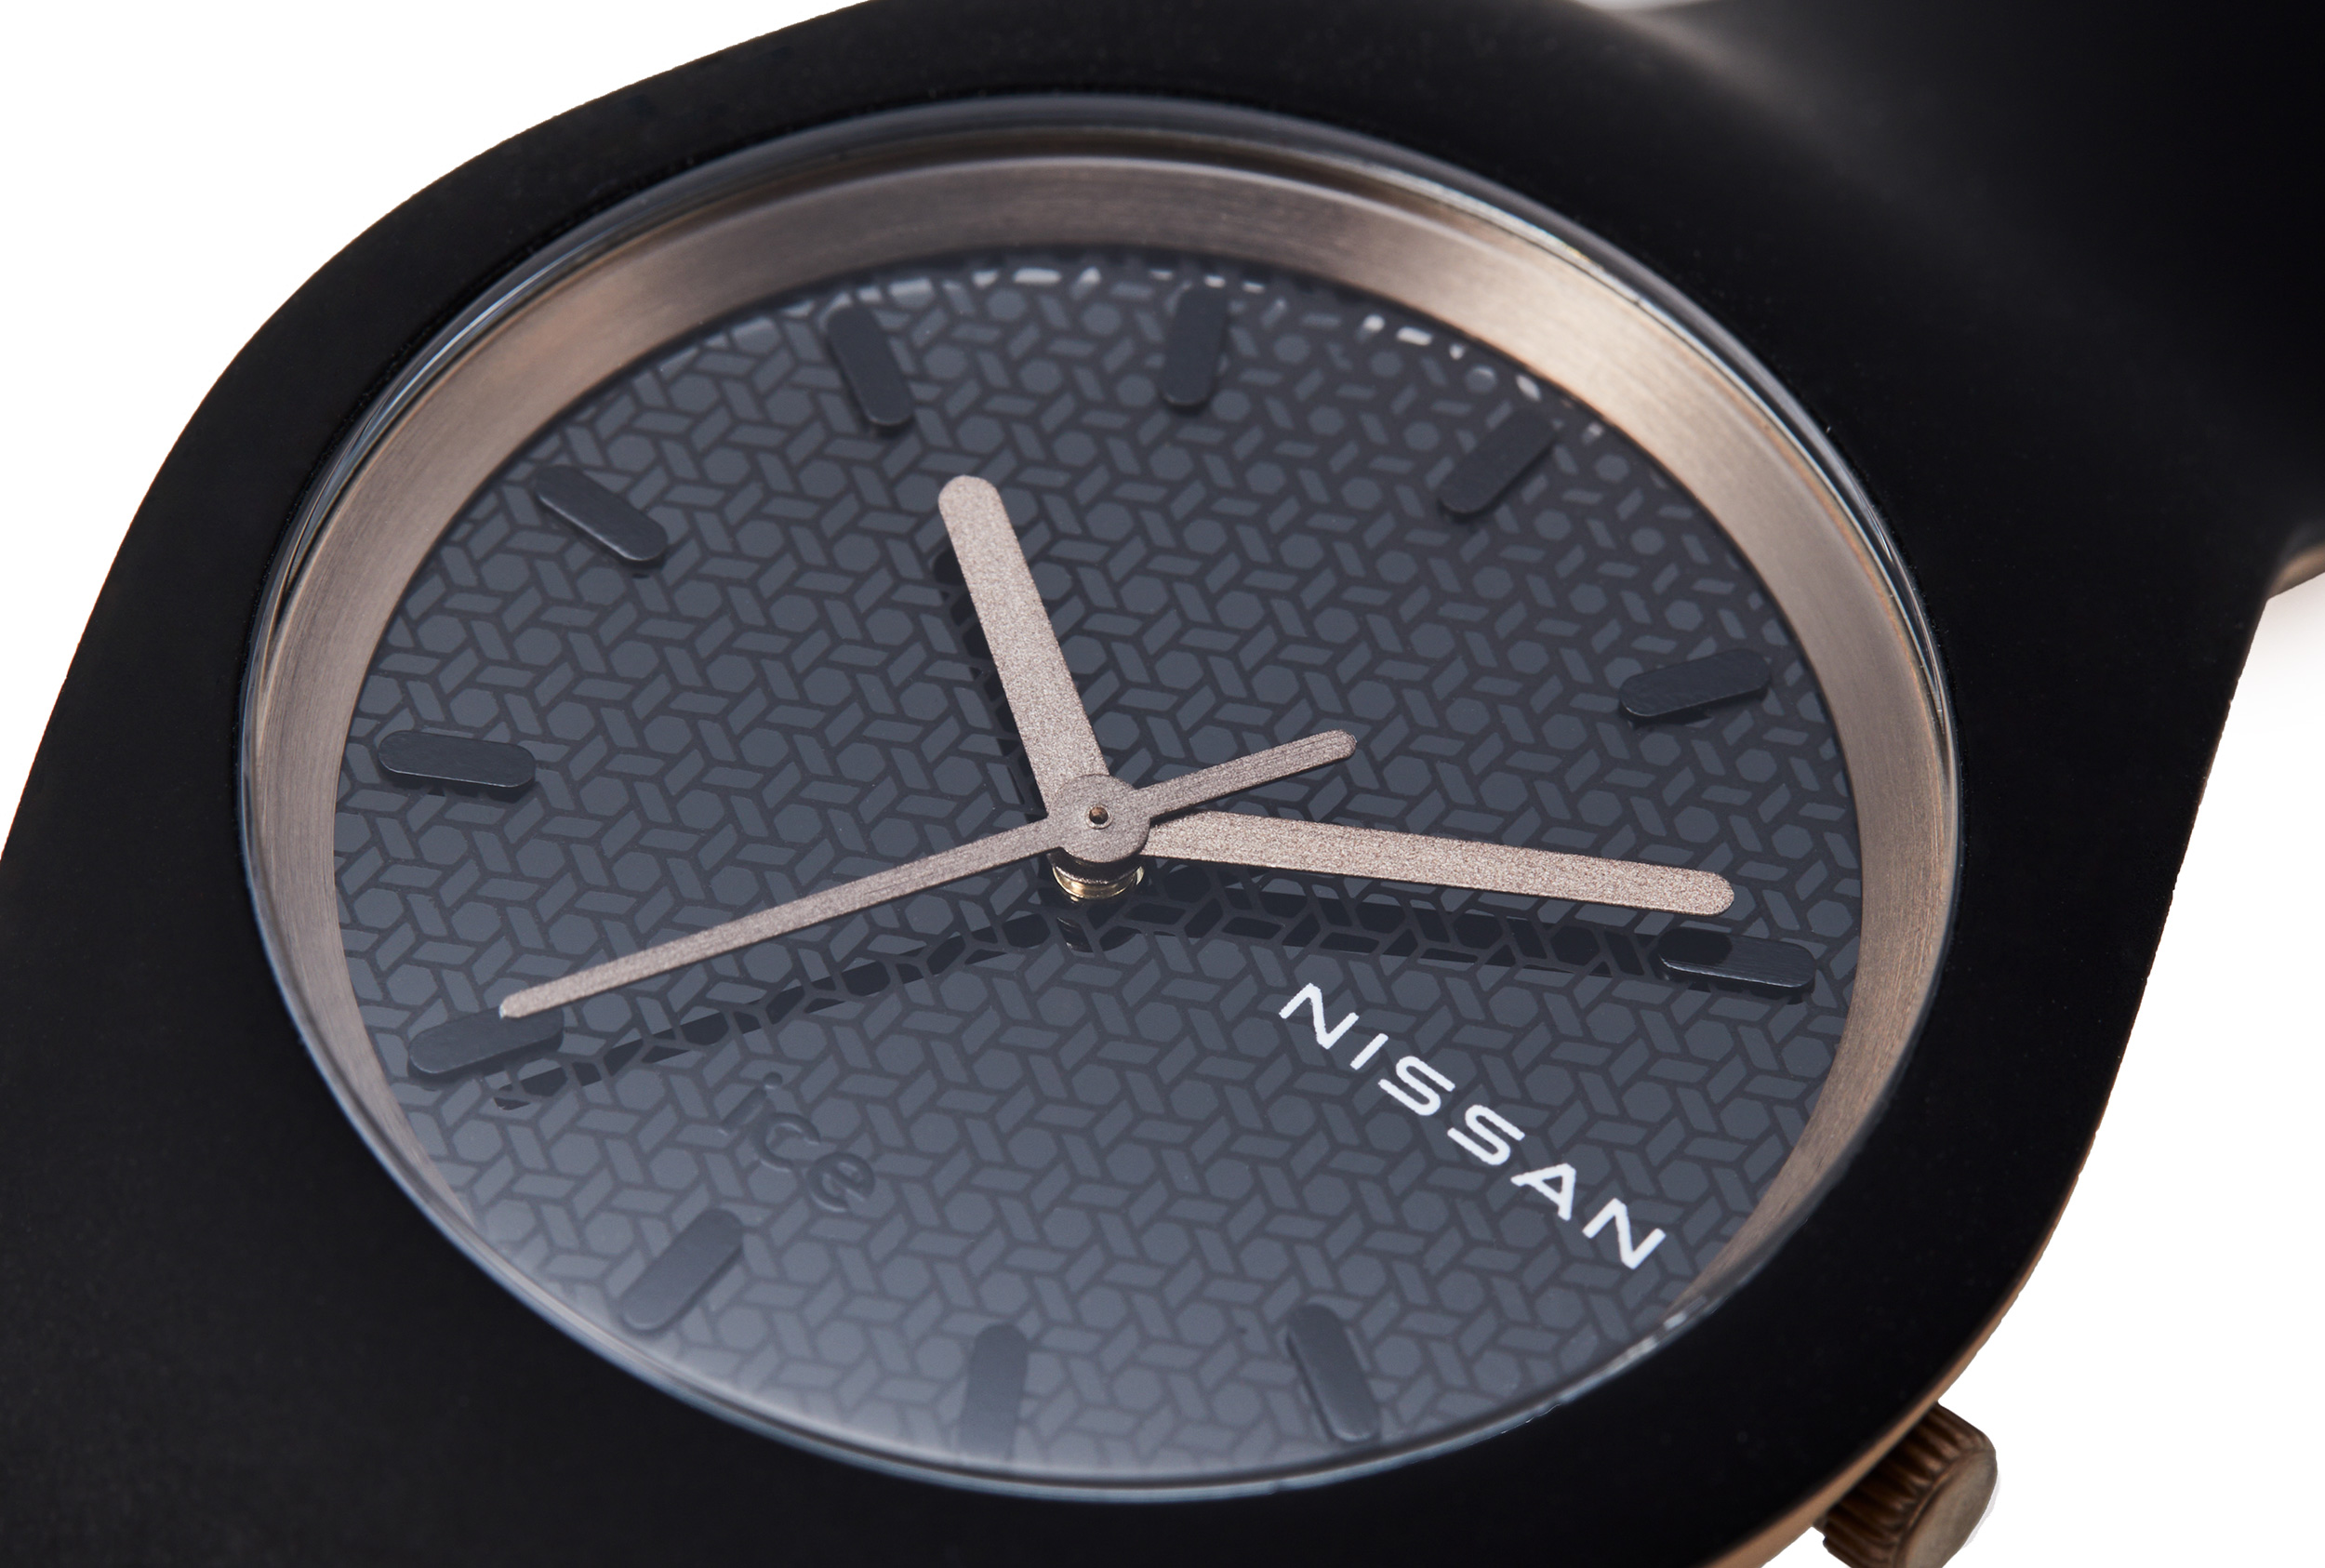 NISSAN・Be-1・腕時計未使用で箱入り綺麗なままです